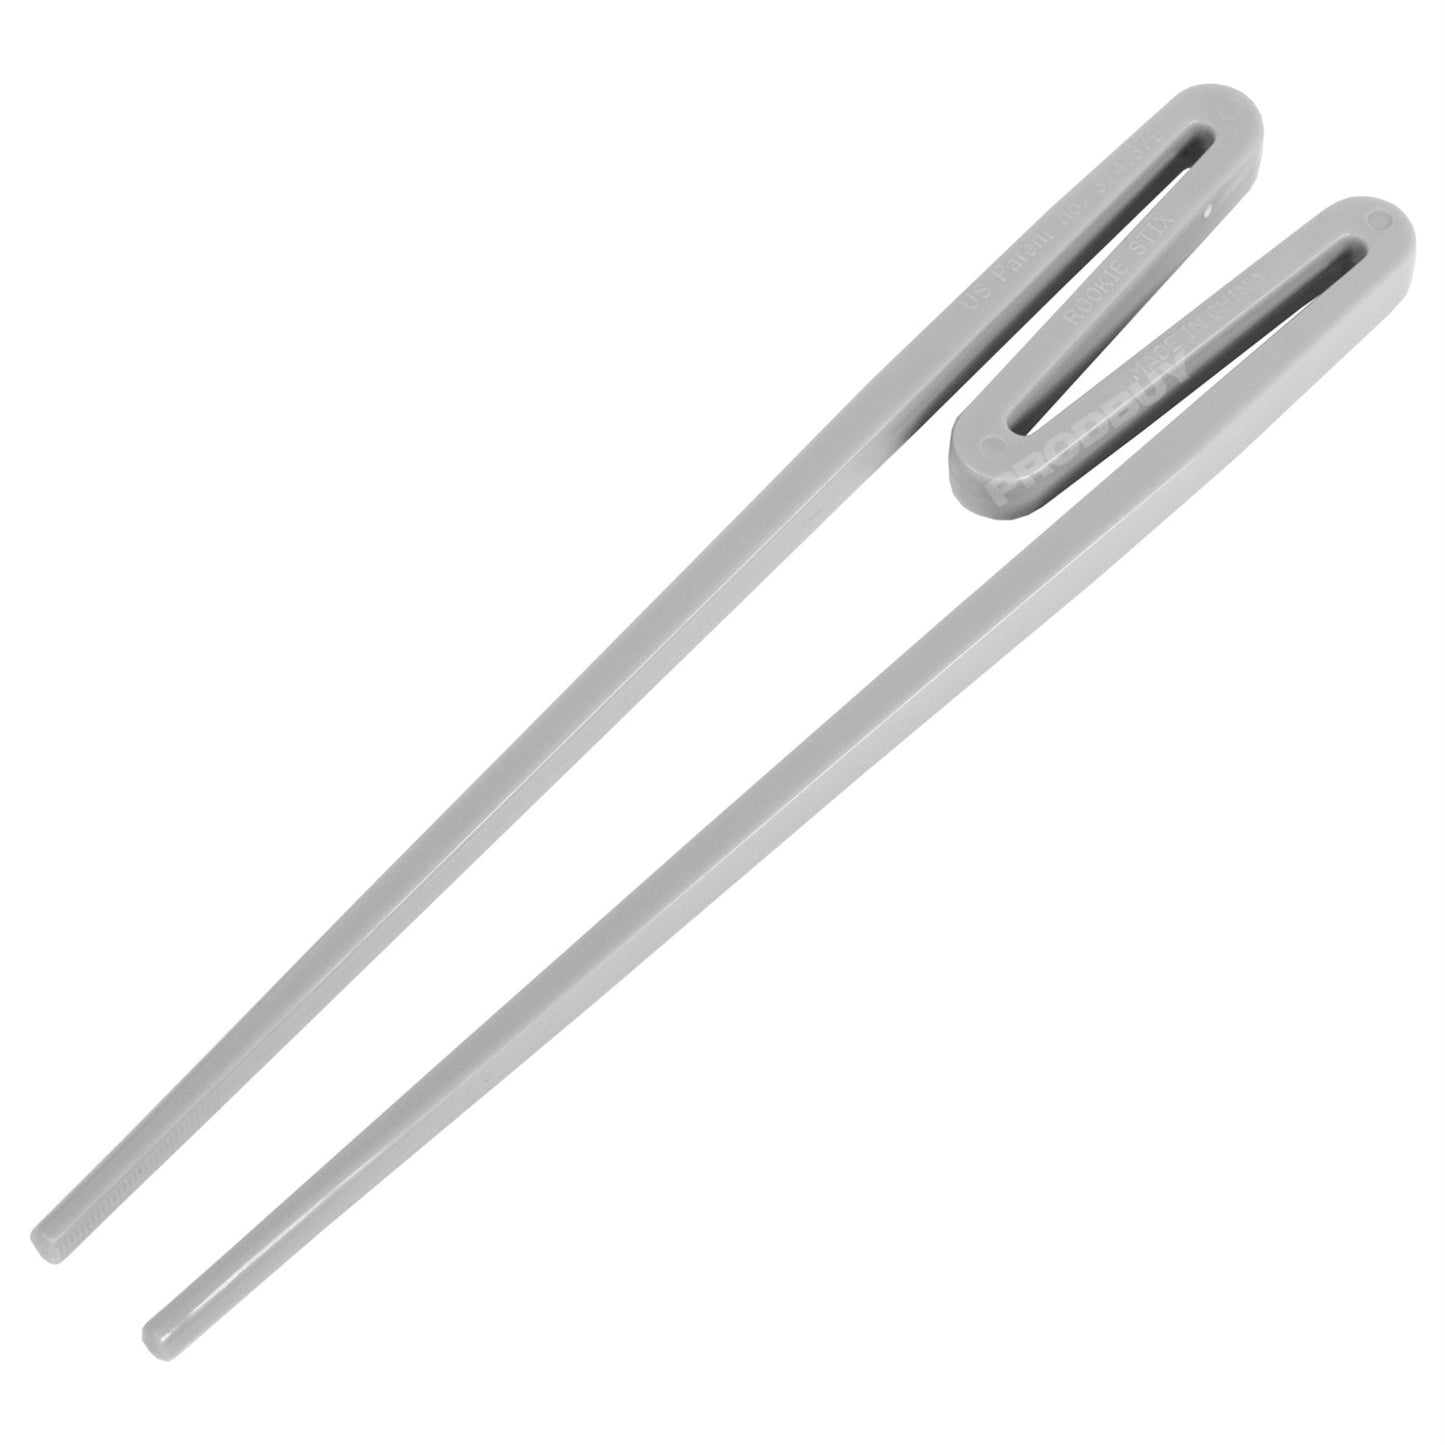 Typhoon Single Pair of Rookie Stix Easy To Use Chopsticks